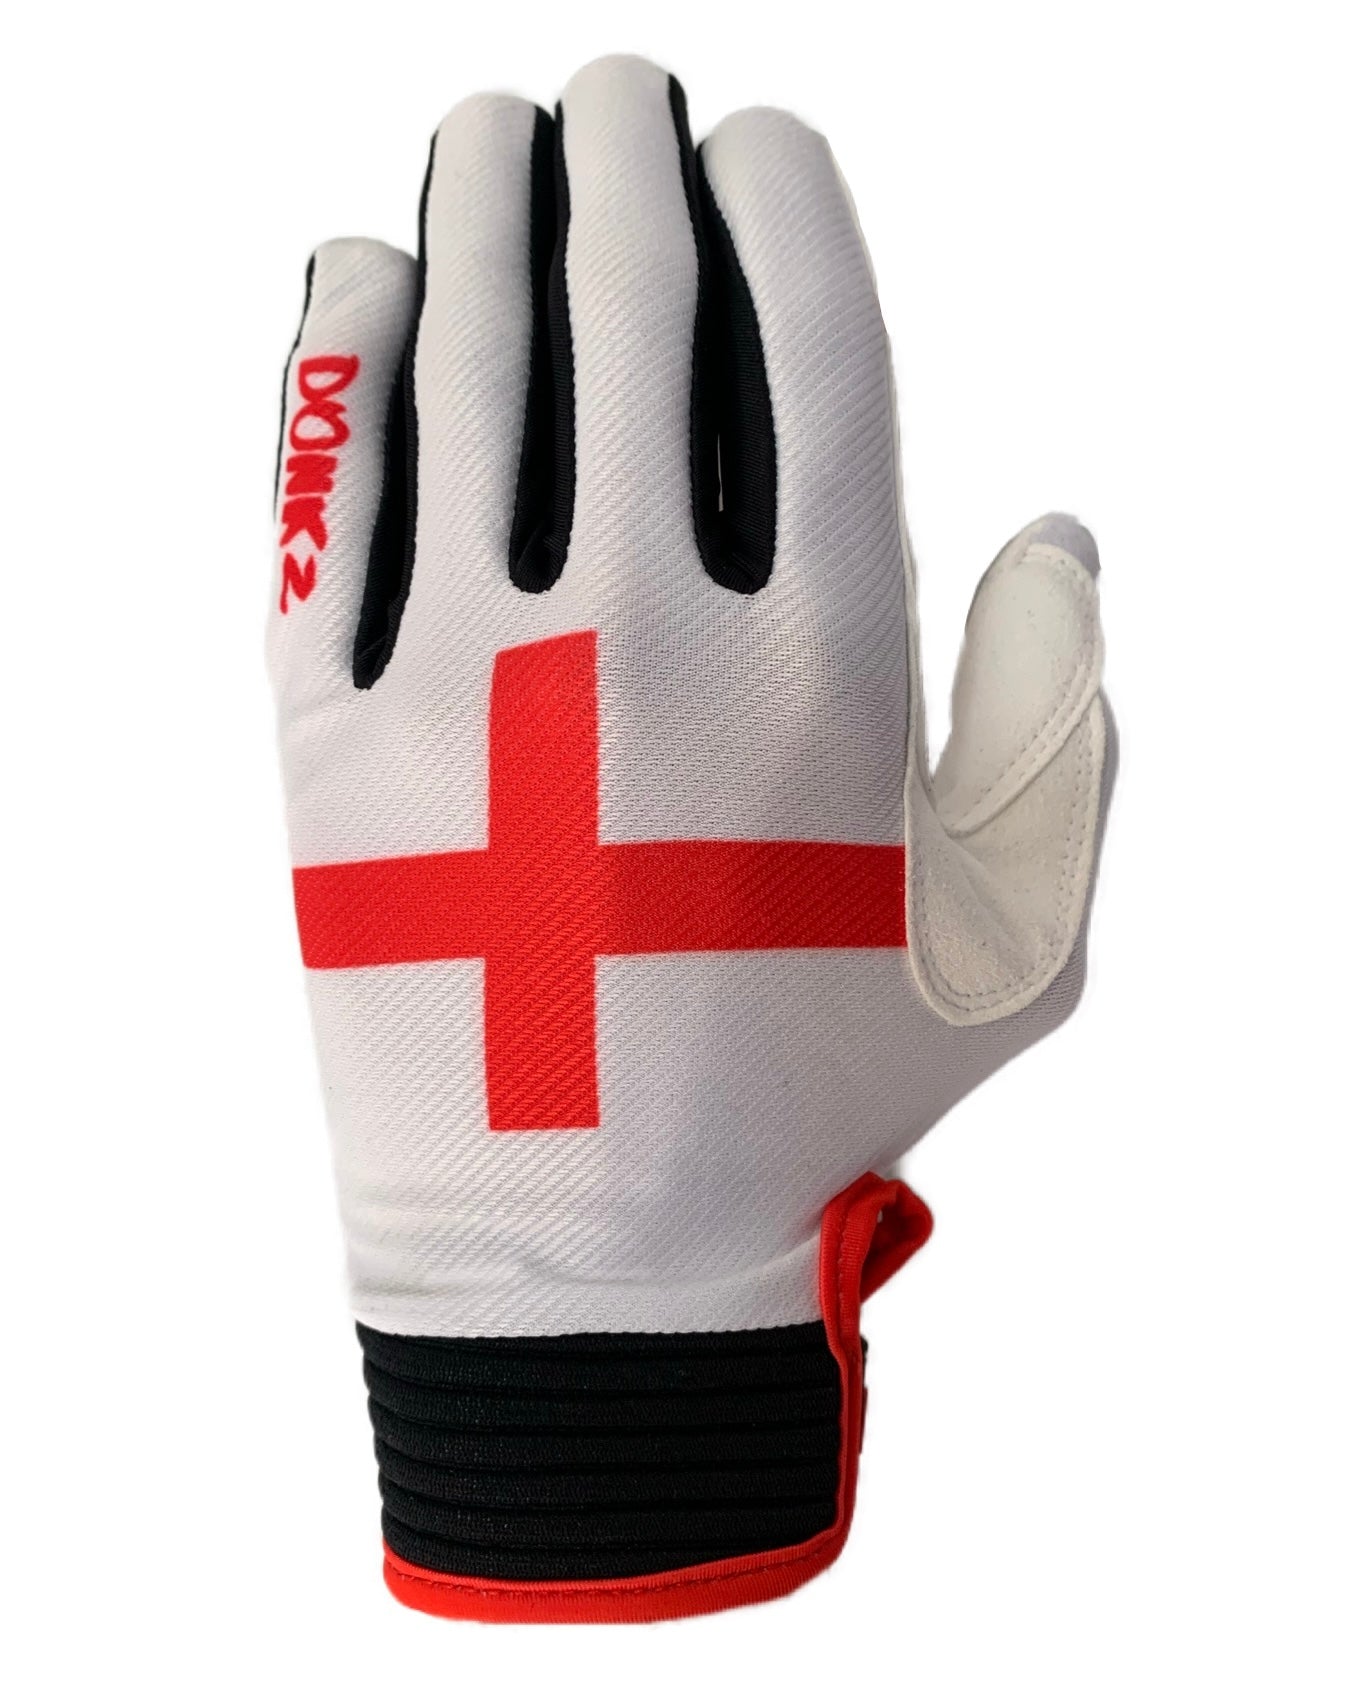 England Gloves